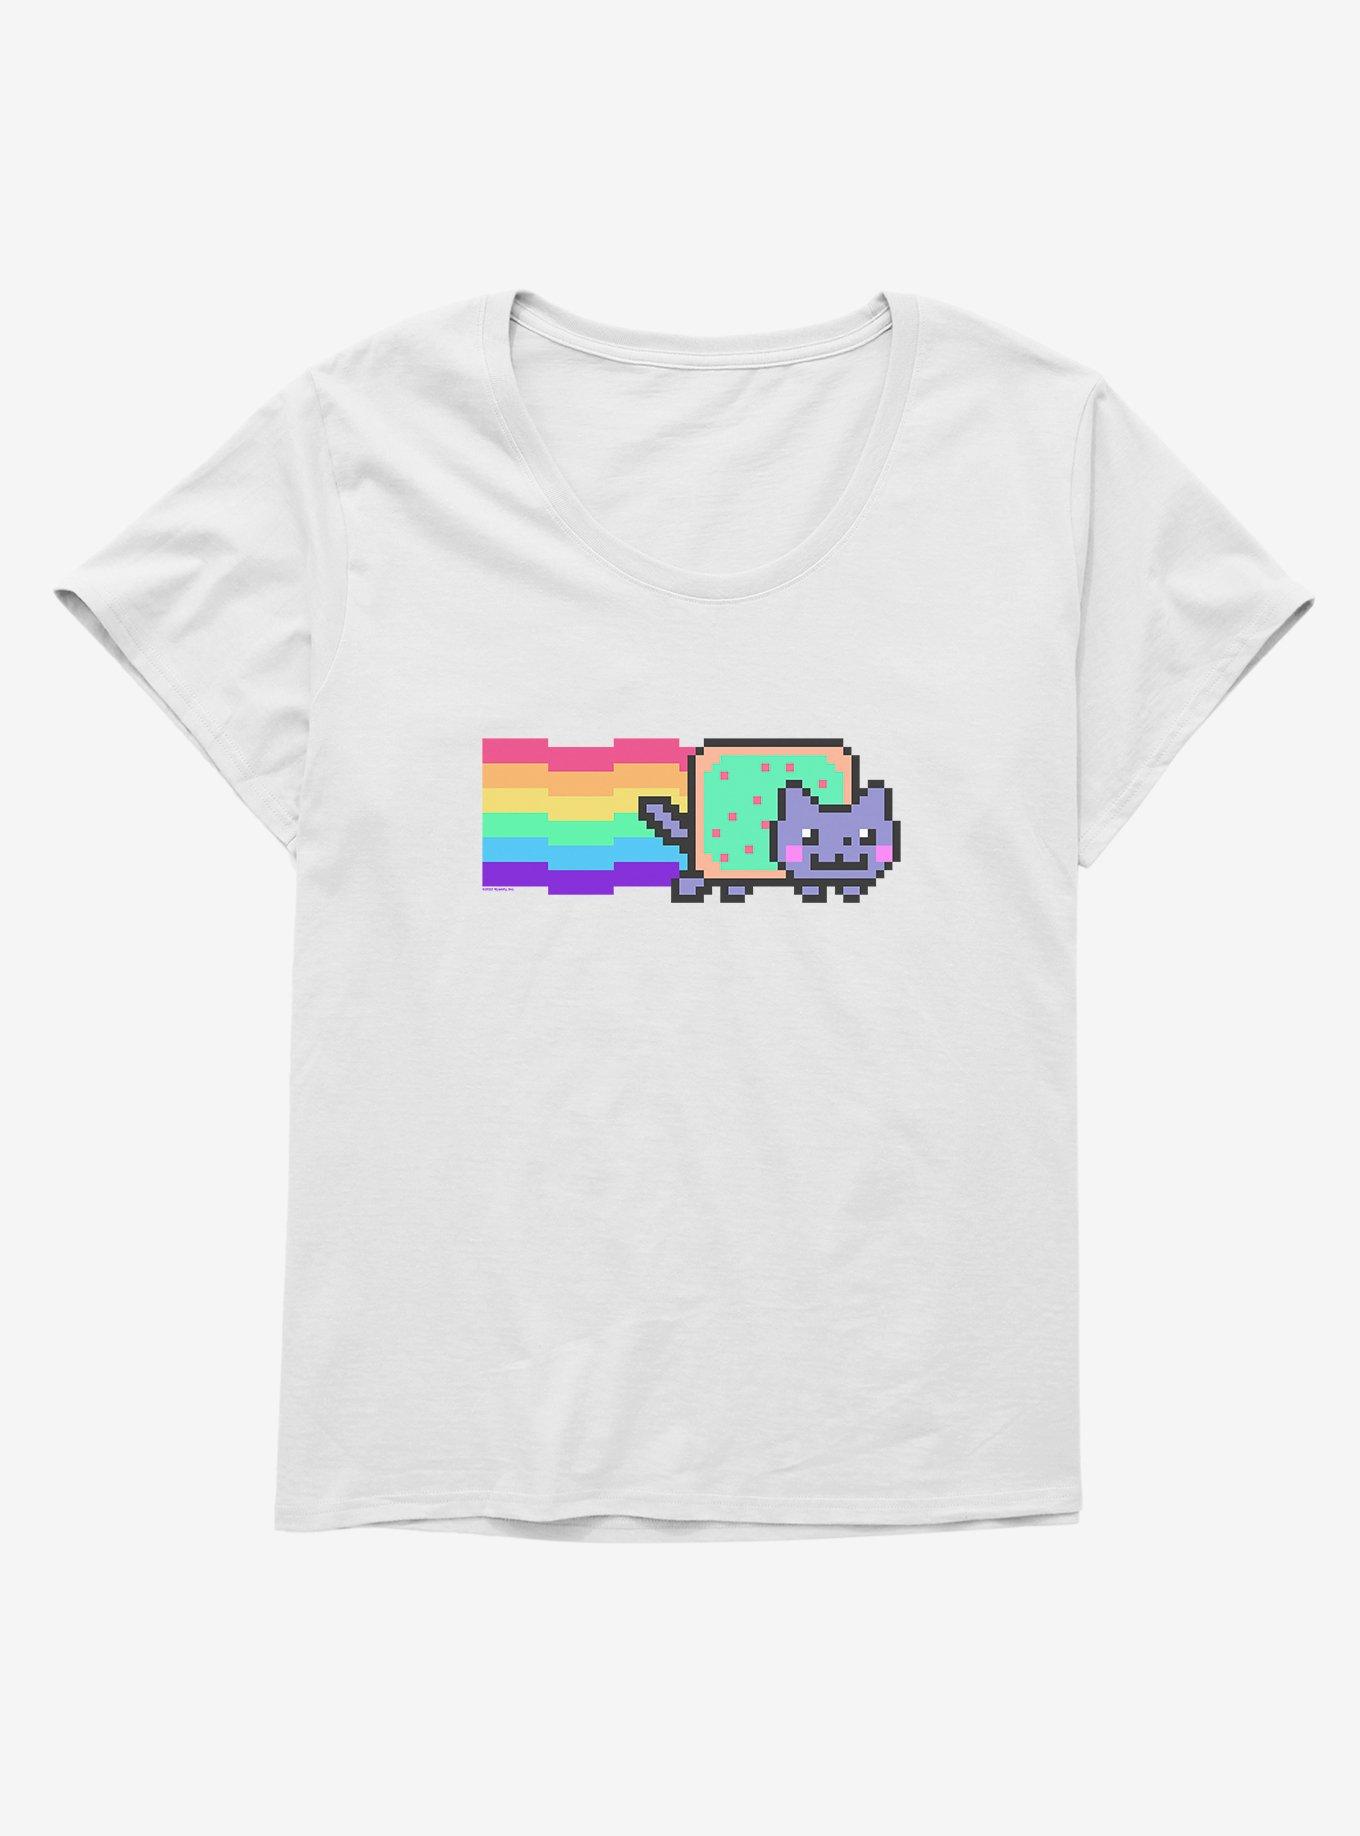 Nyan Cat Vaporwave Girls T-Shirt Plus